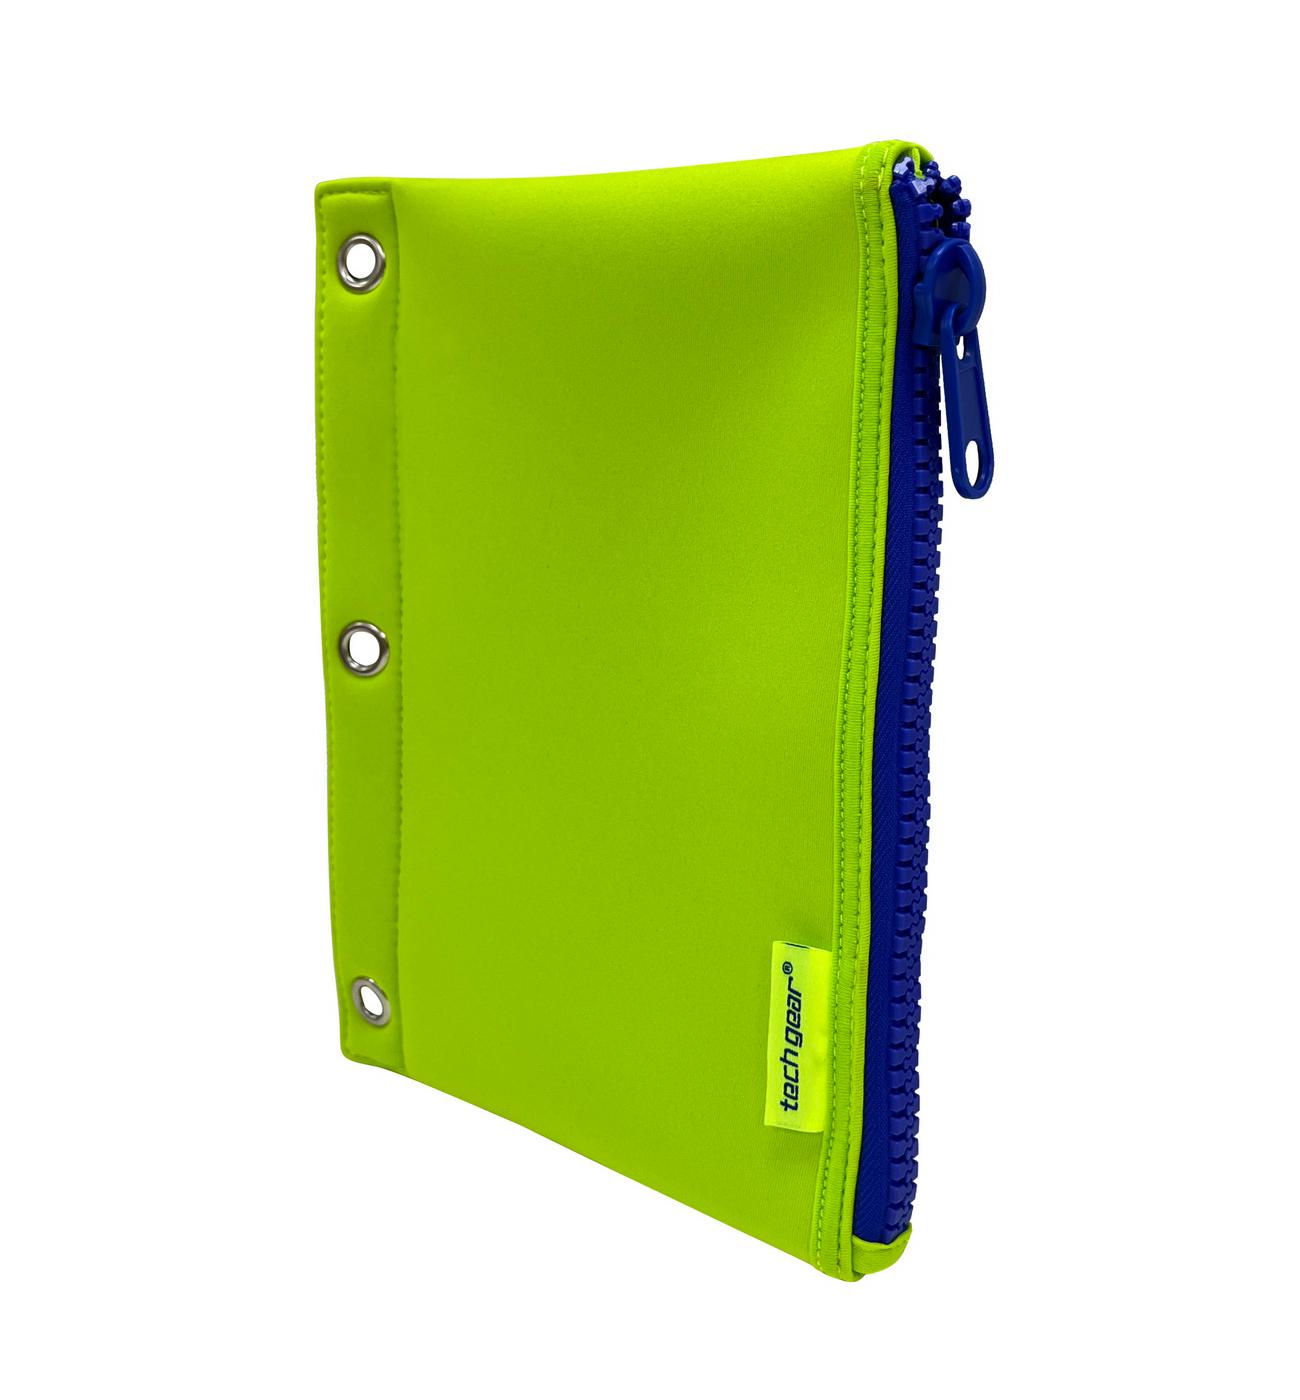 Tech Gear Neo XLZ Binder Pouch - Green & Blue; image 2 of 2